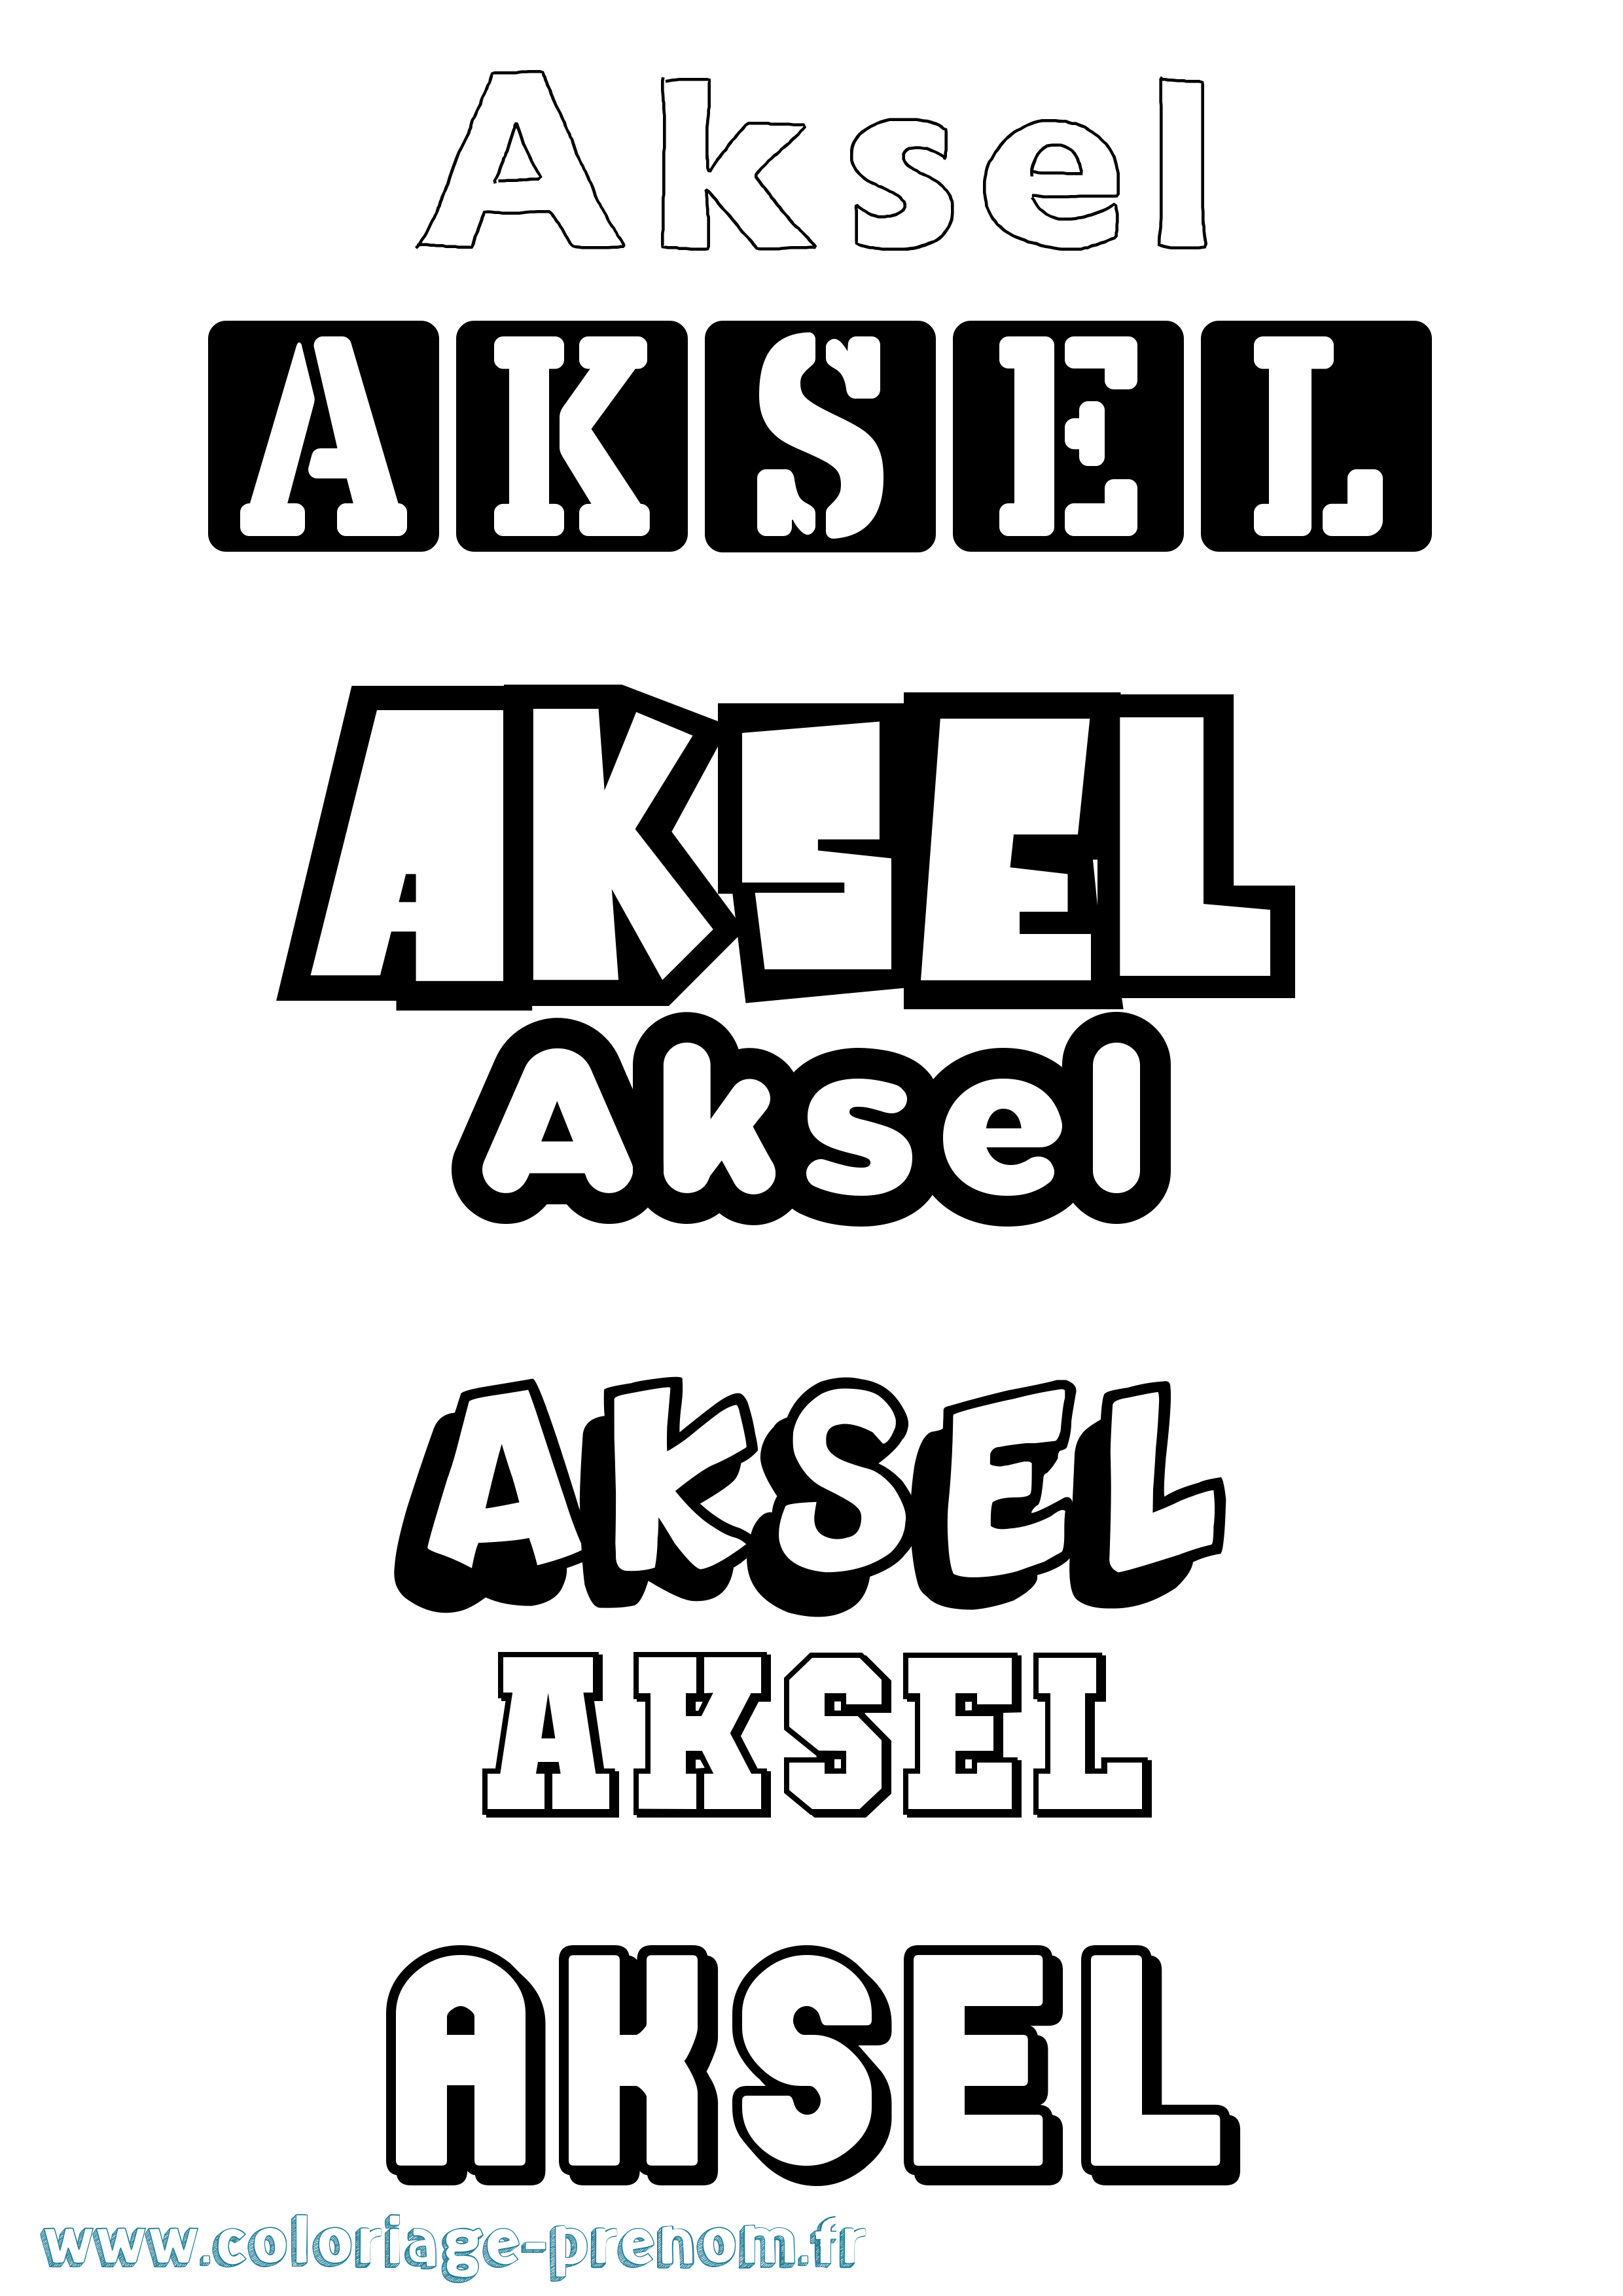 Coloriage prénom Aksel